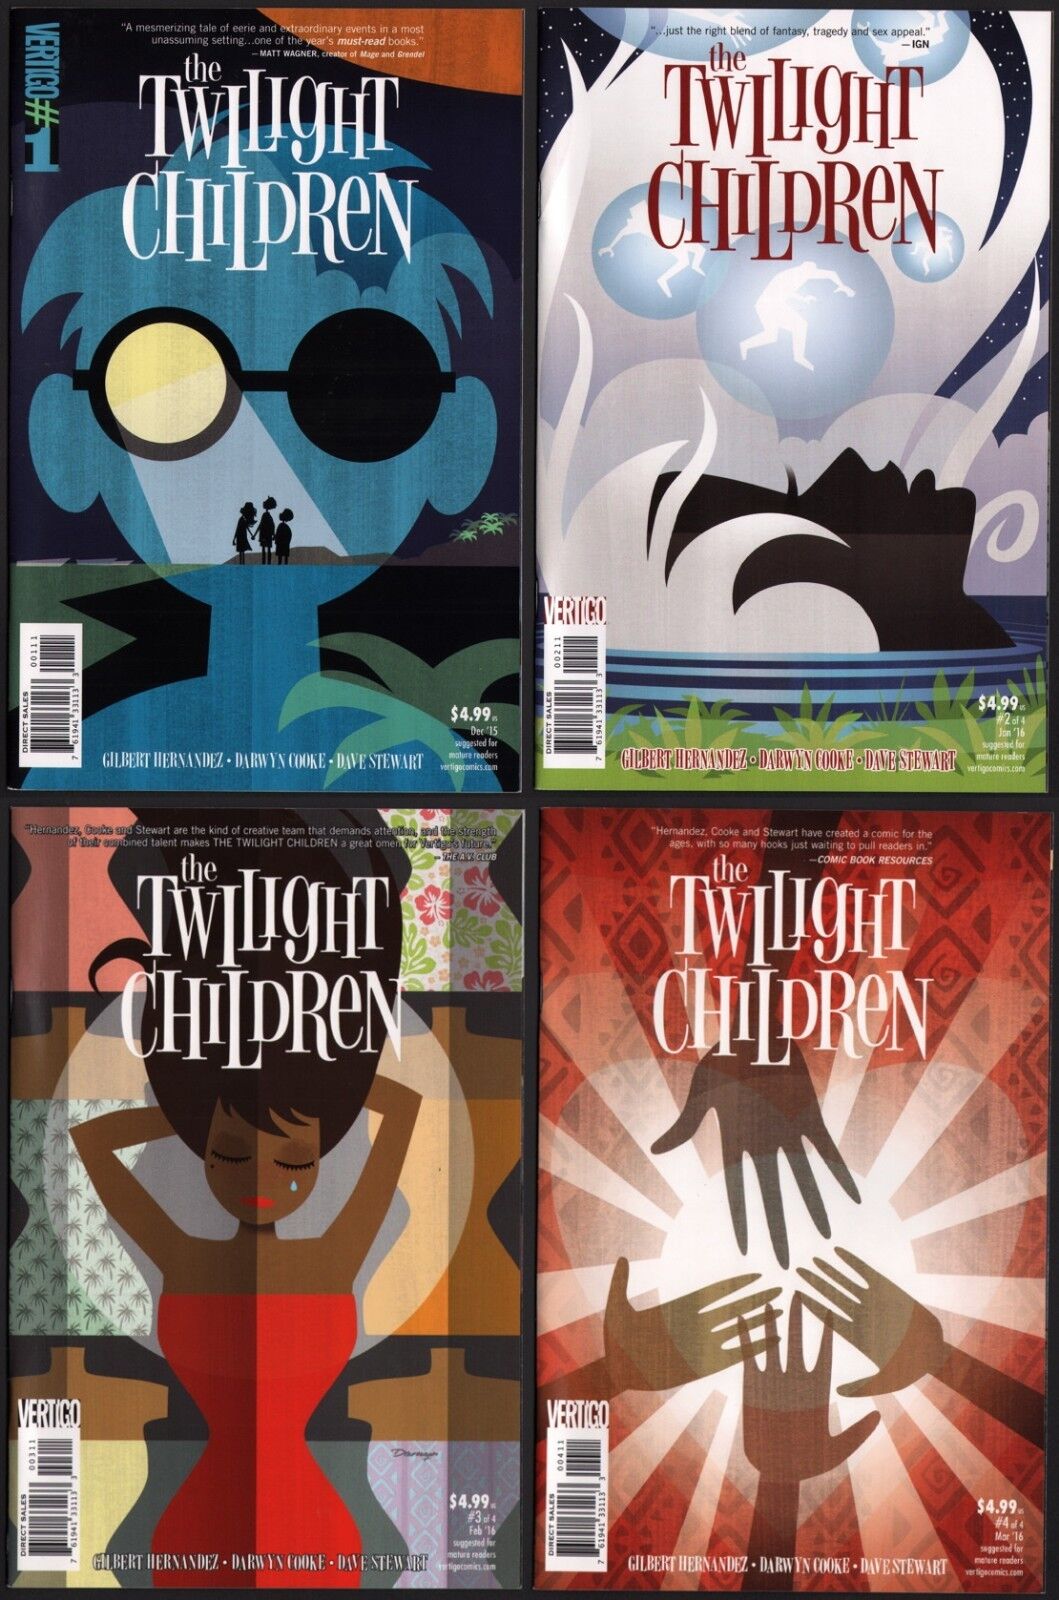 The Twilight Children #1 #2 #3 #4 Full Set Vertigo / DC Comics